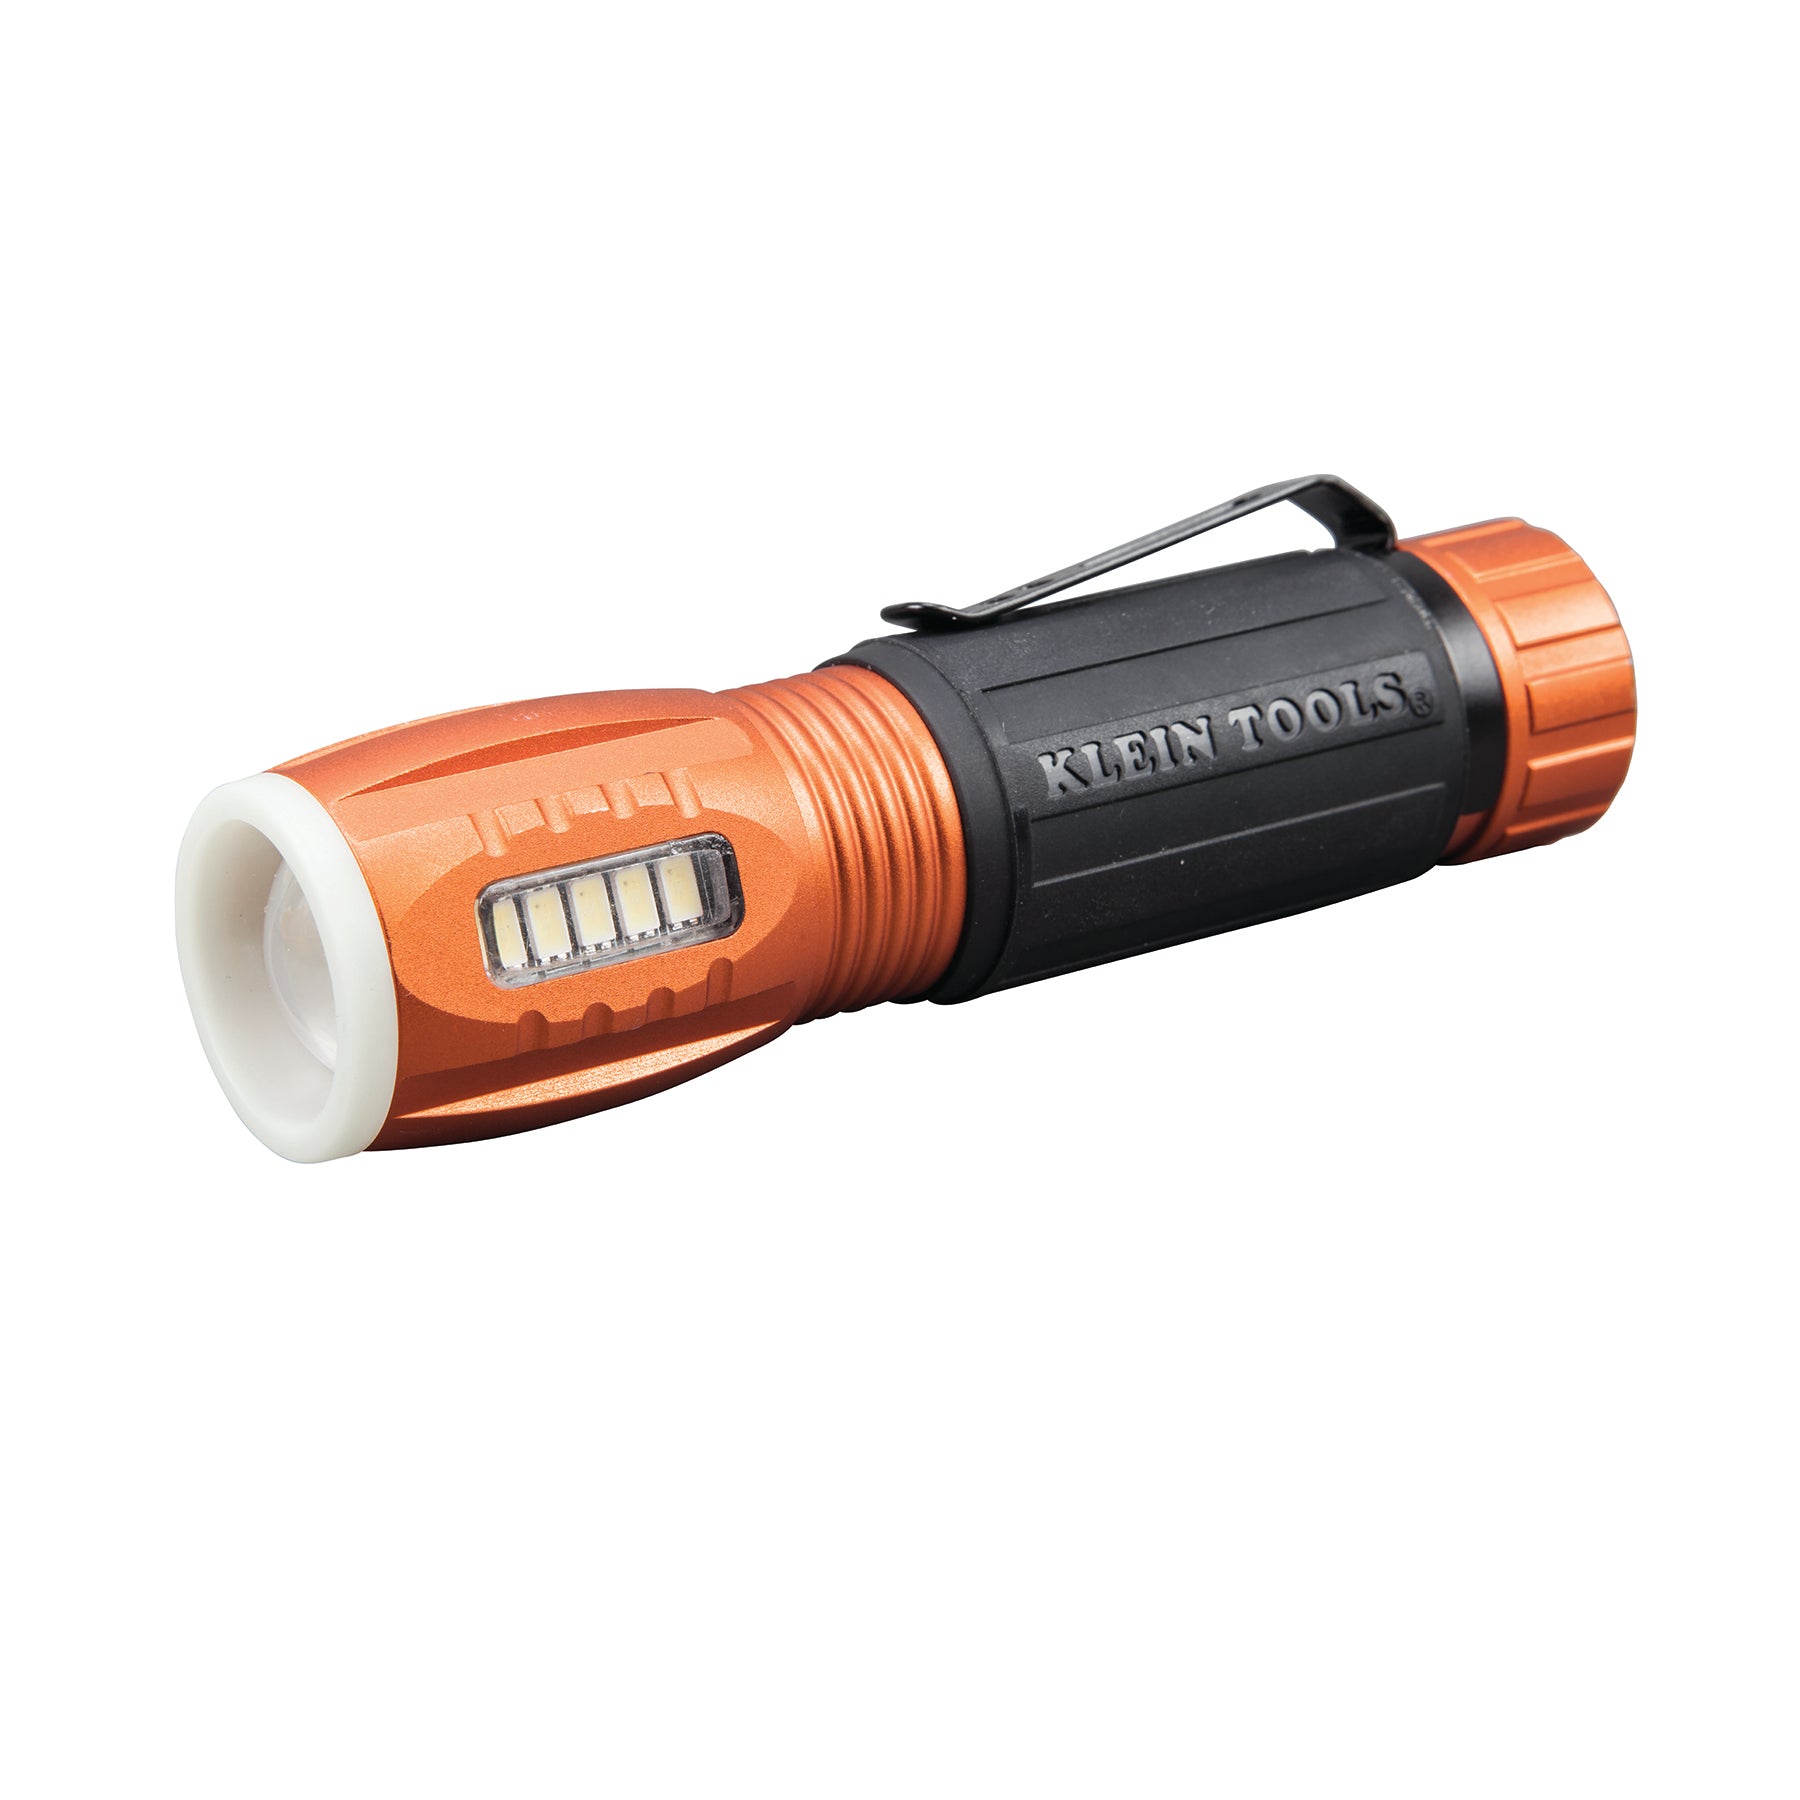 560284 Klein Tools Led flashlight